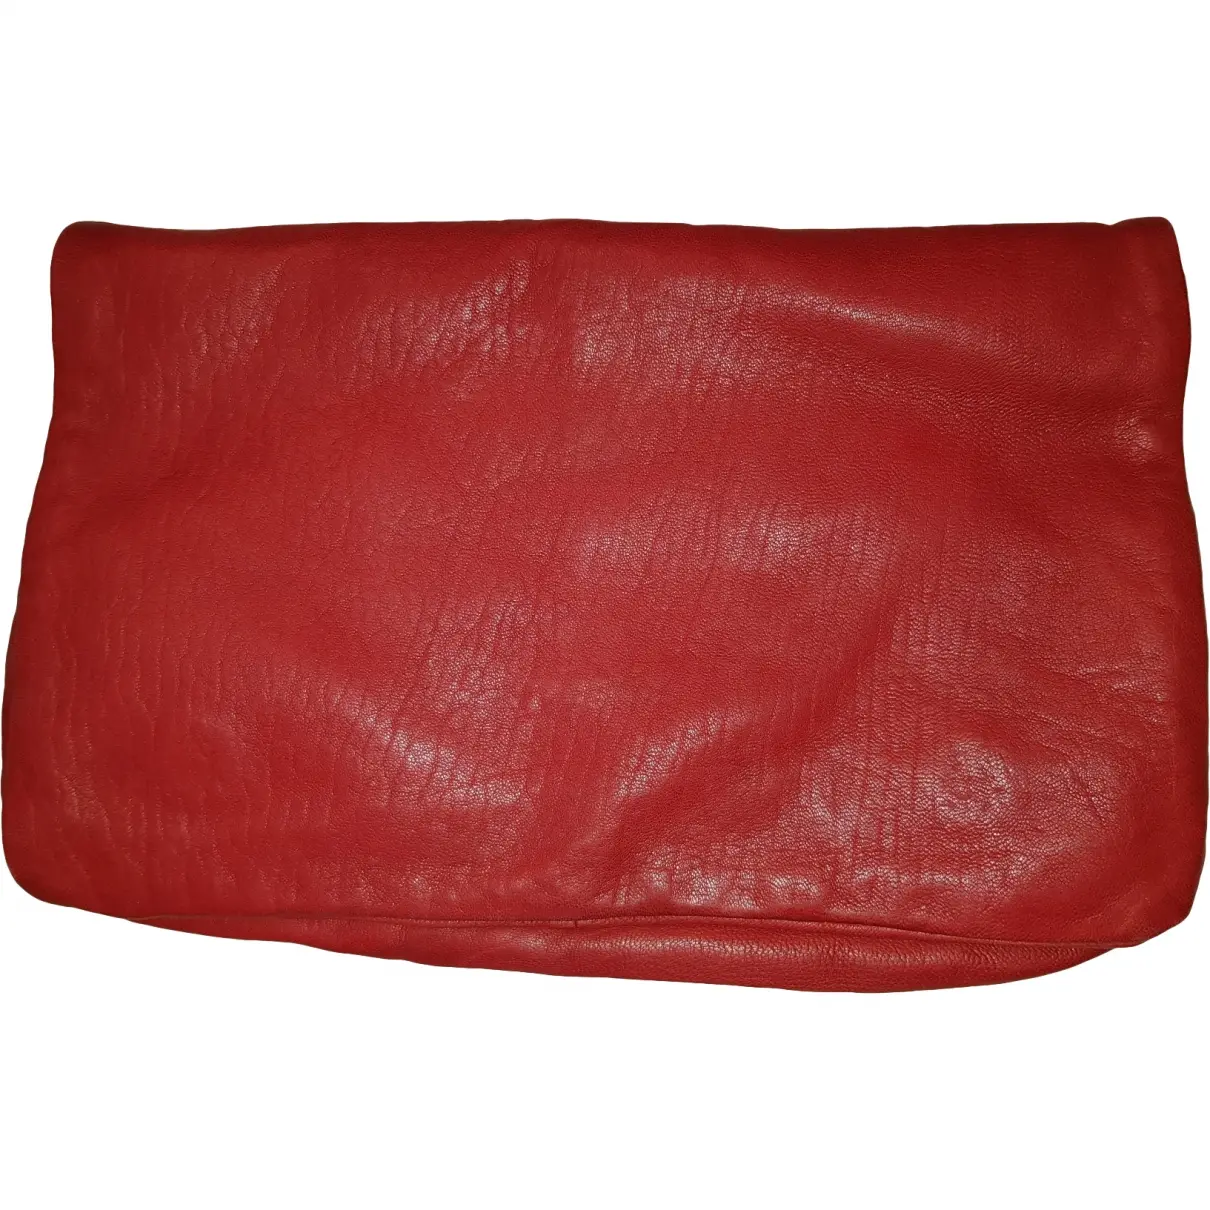 Leather clutch bag Maje